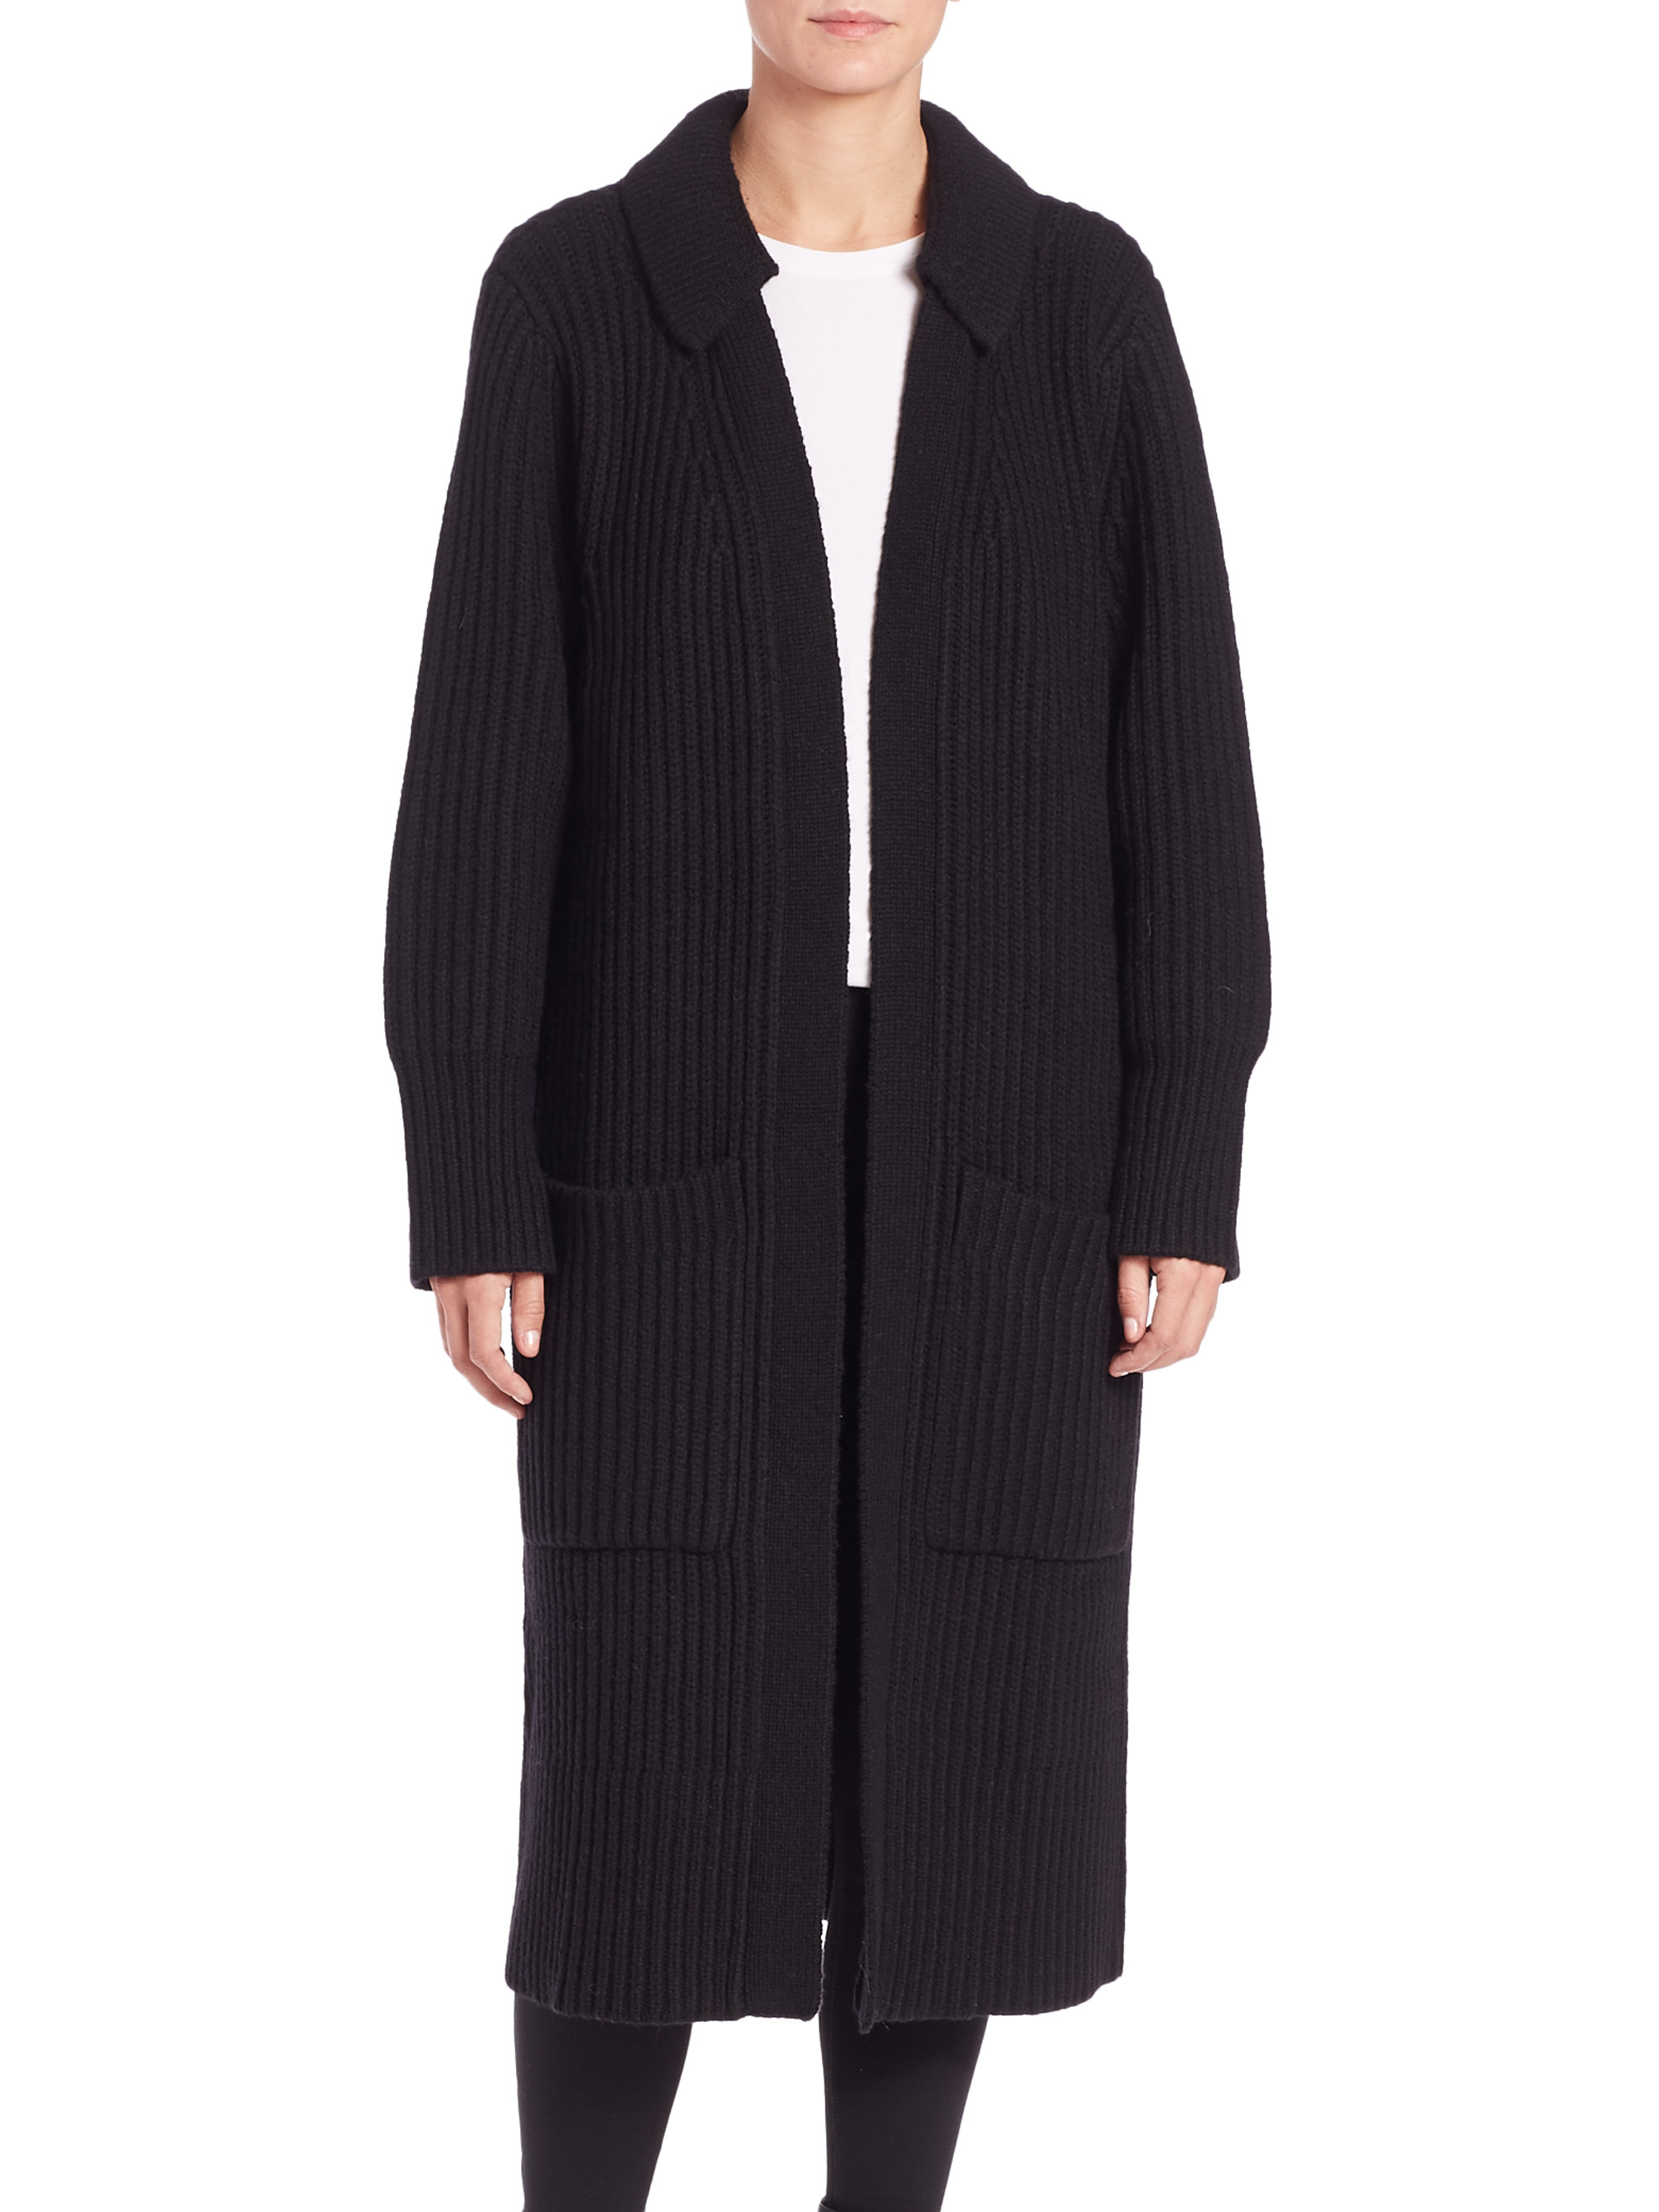 Lyst - Burberry Brit Long Coat Cardigan in Black